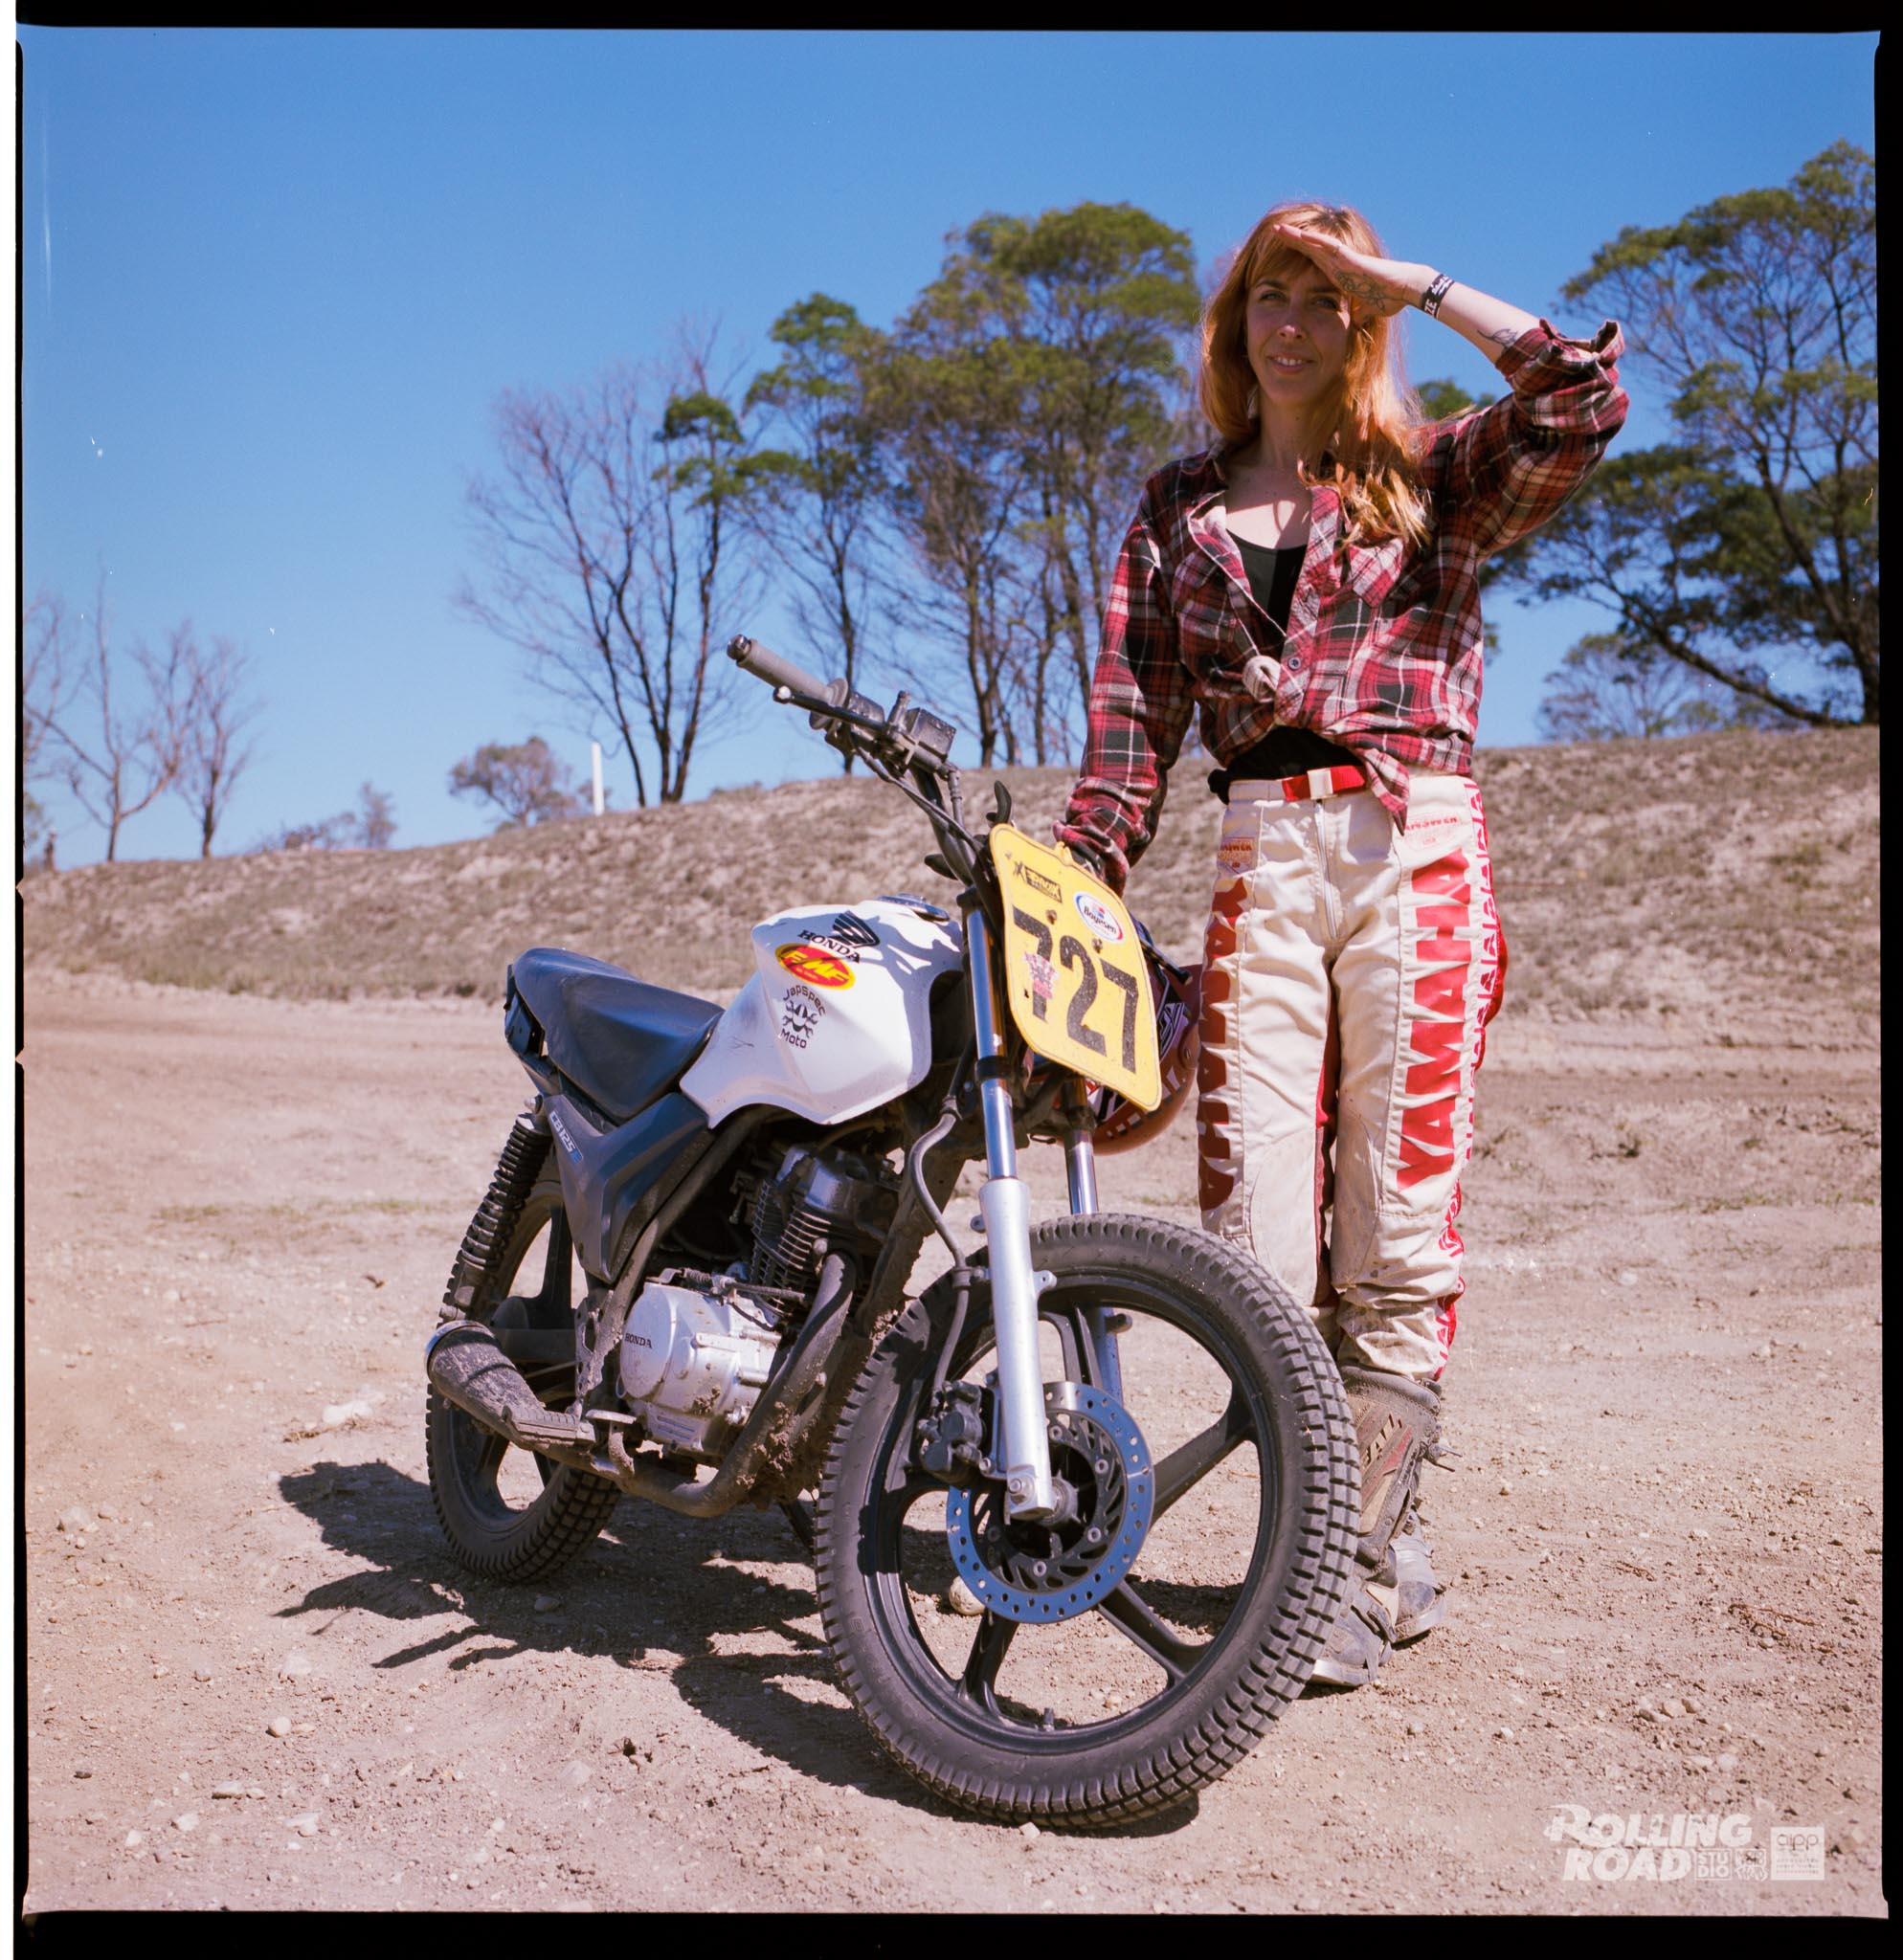 rolling-road-studio-daniel-purvis-photography-motorcycle-064.jpg